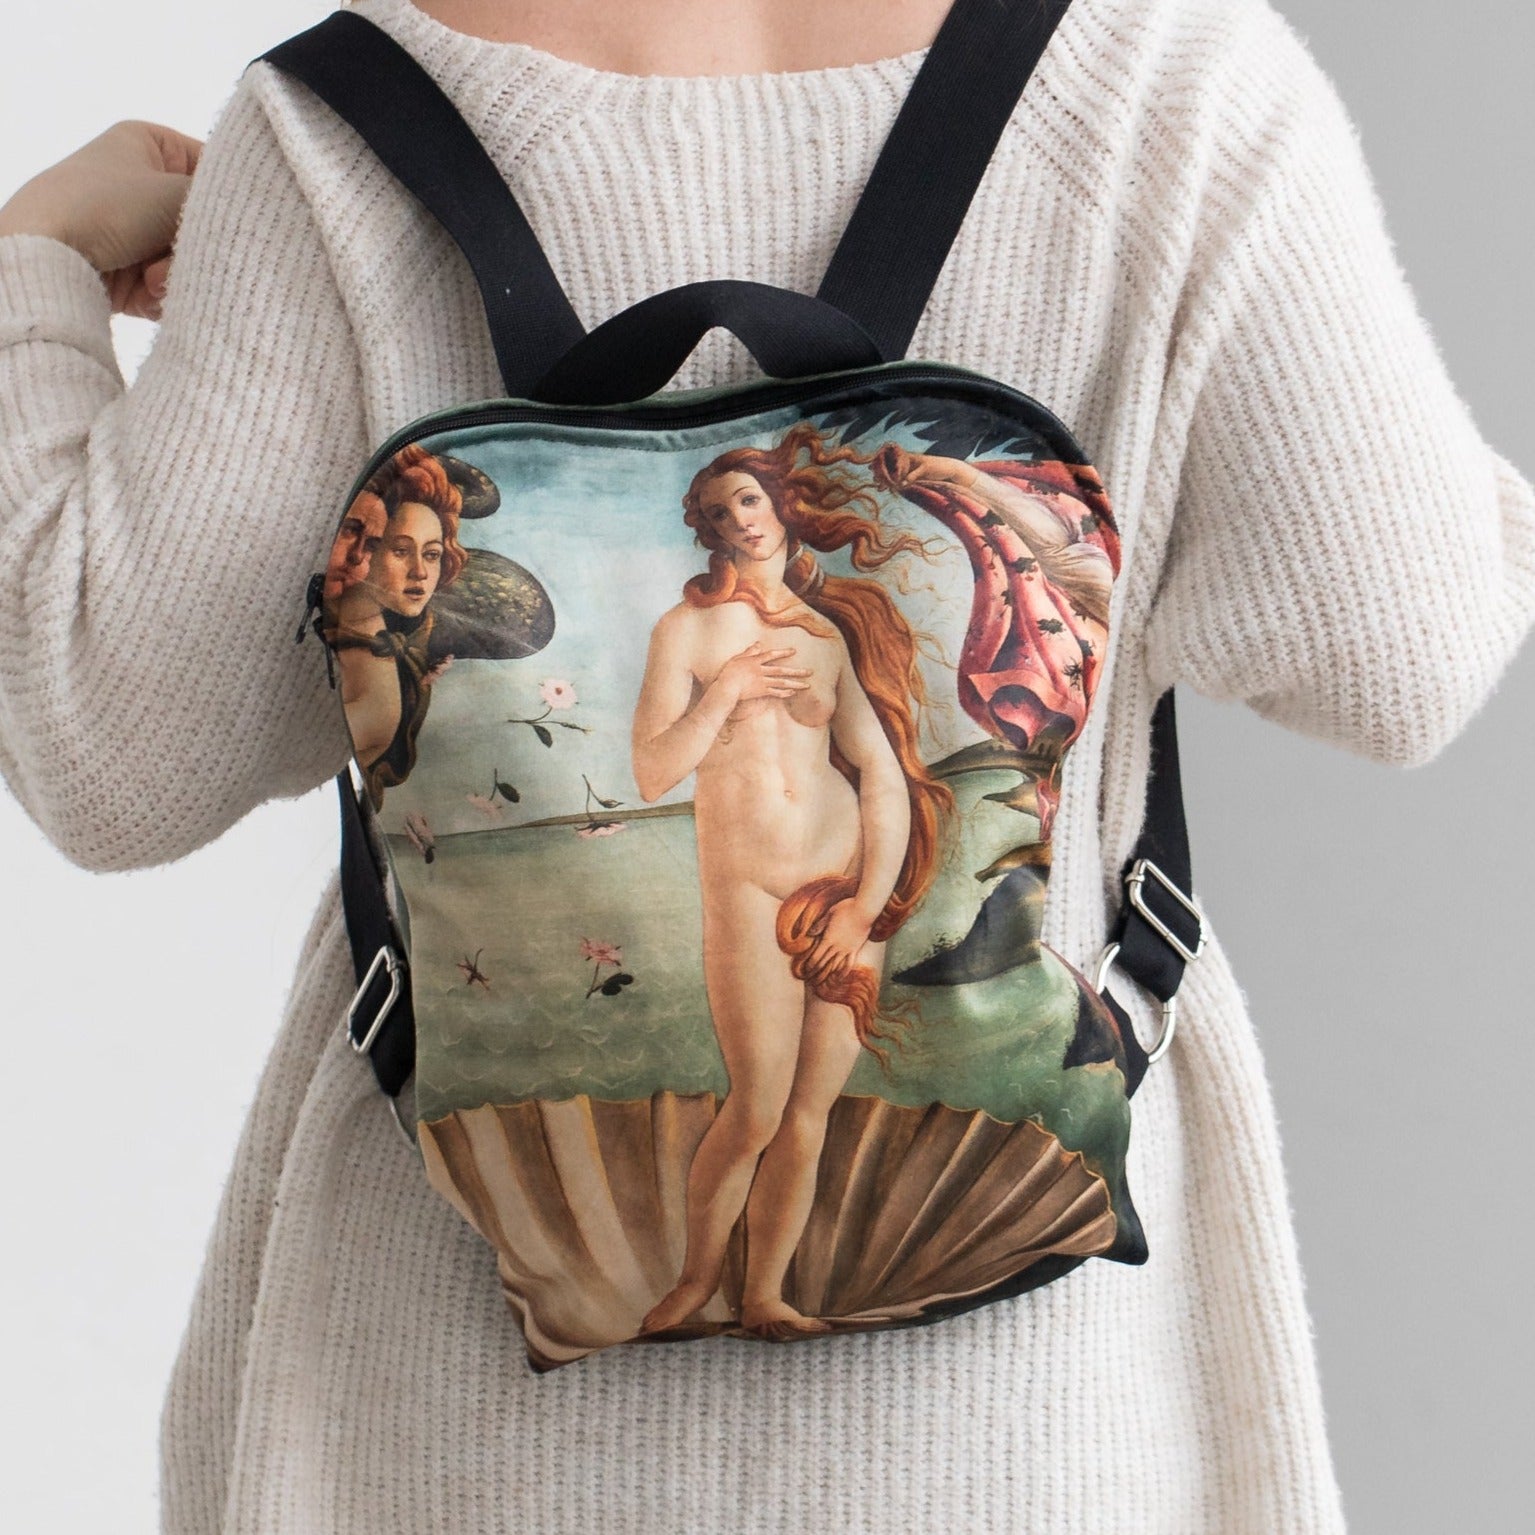 Kuprinė Sandro Botticelli "The Birth of Venus"